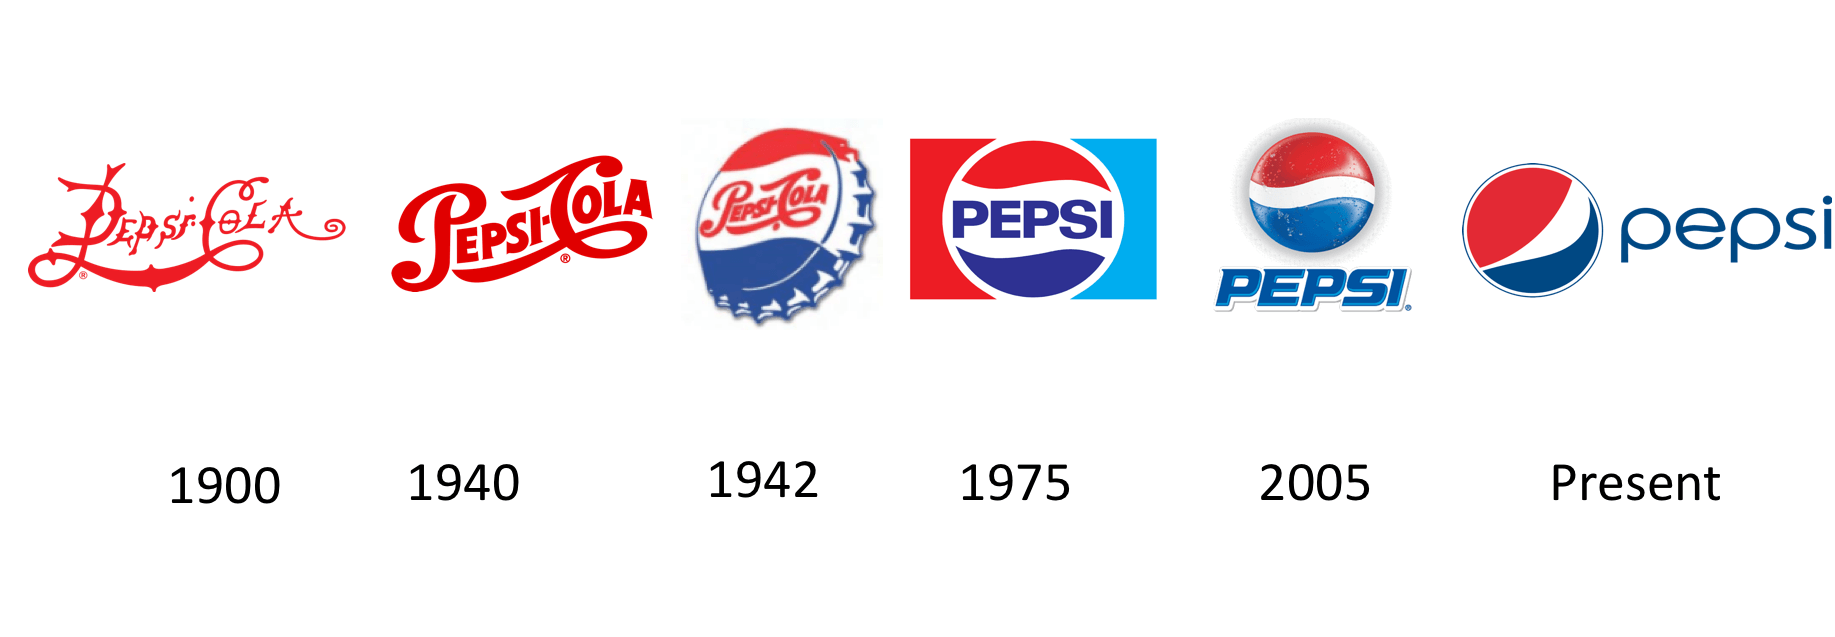 History Pepsi Logo - History of the Pepsi logo